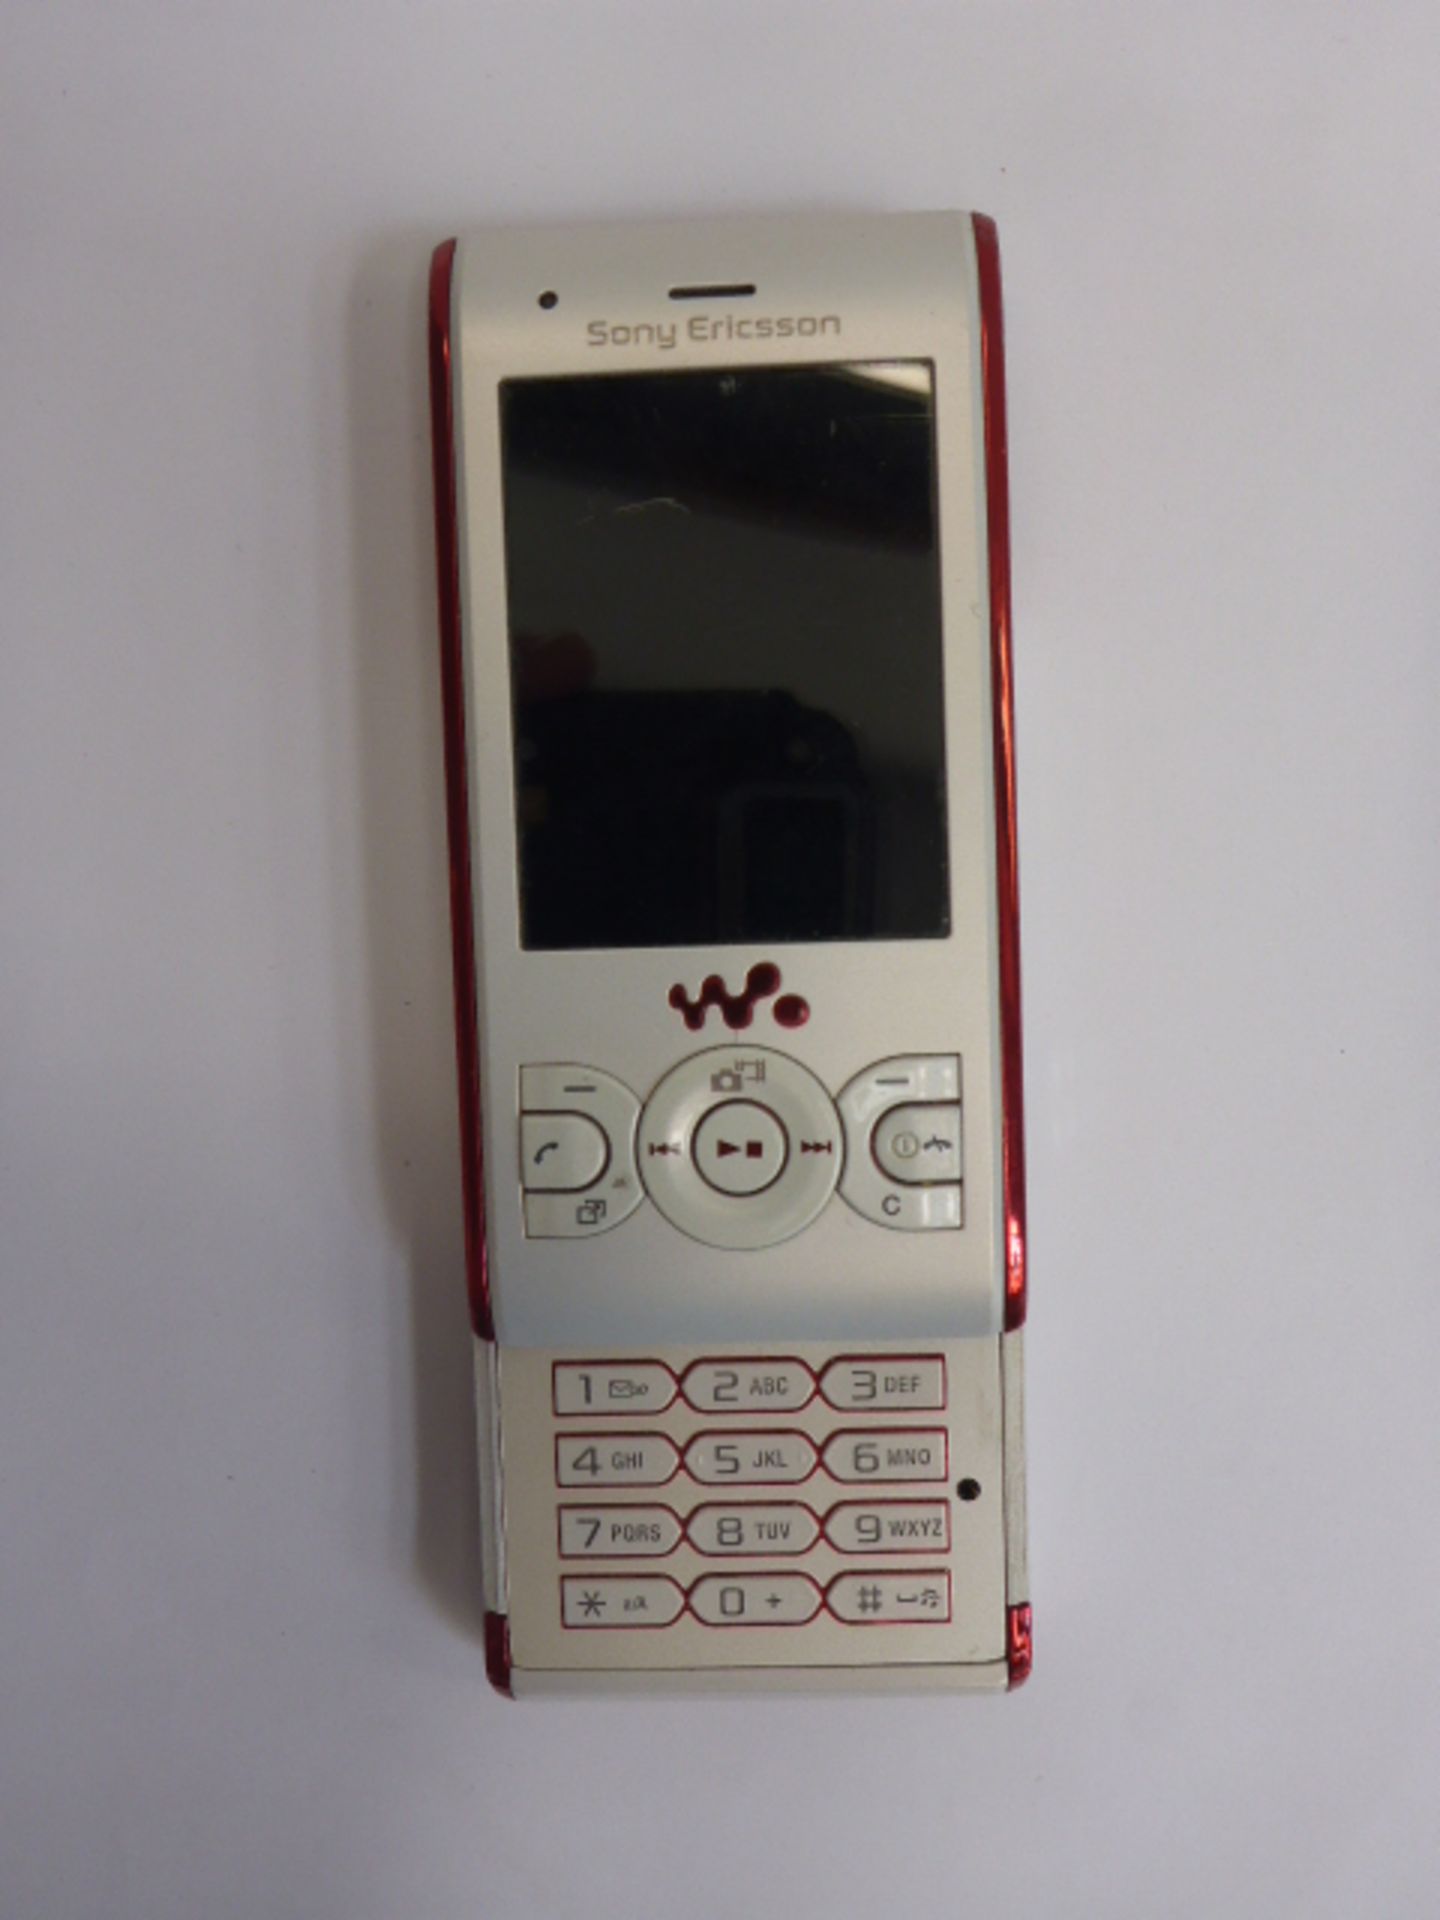 Sony Ericsson slide mobile phone